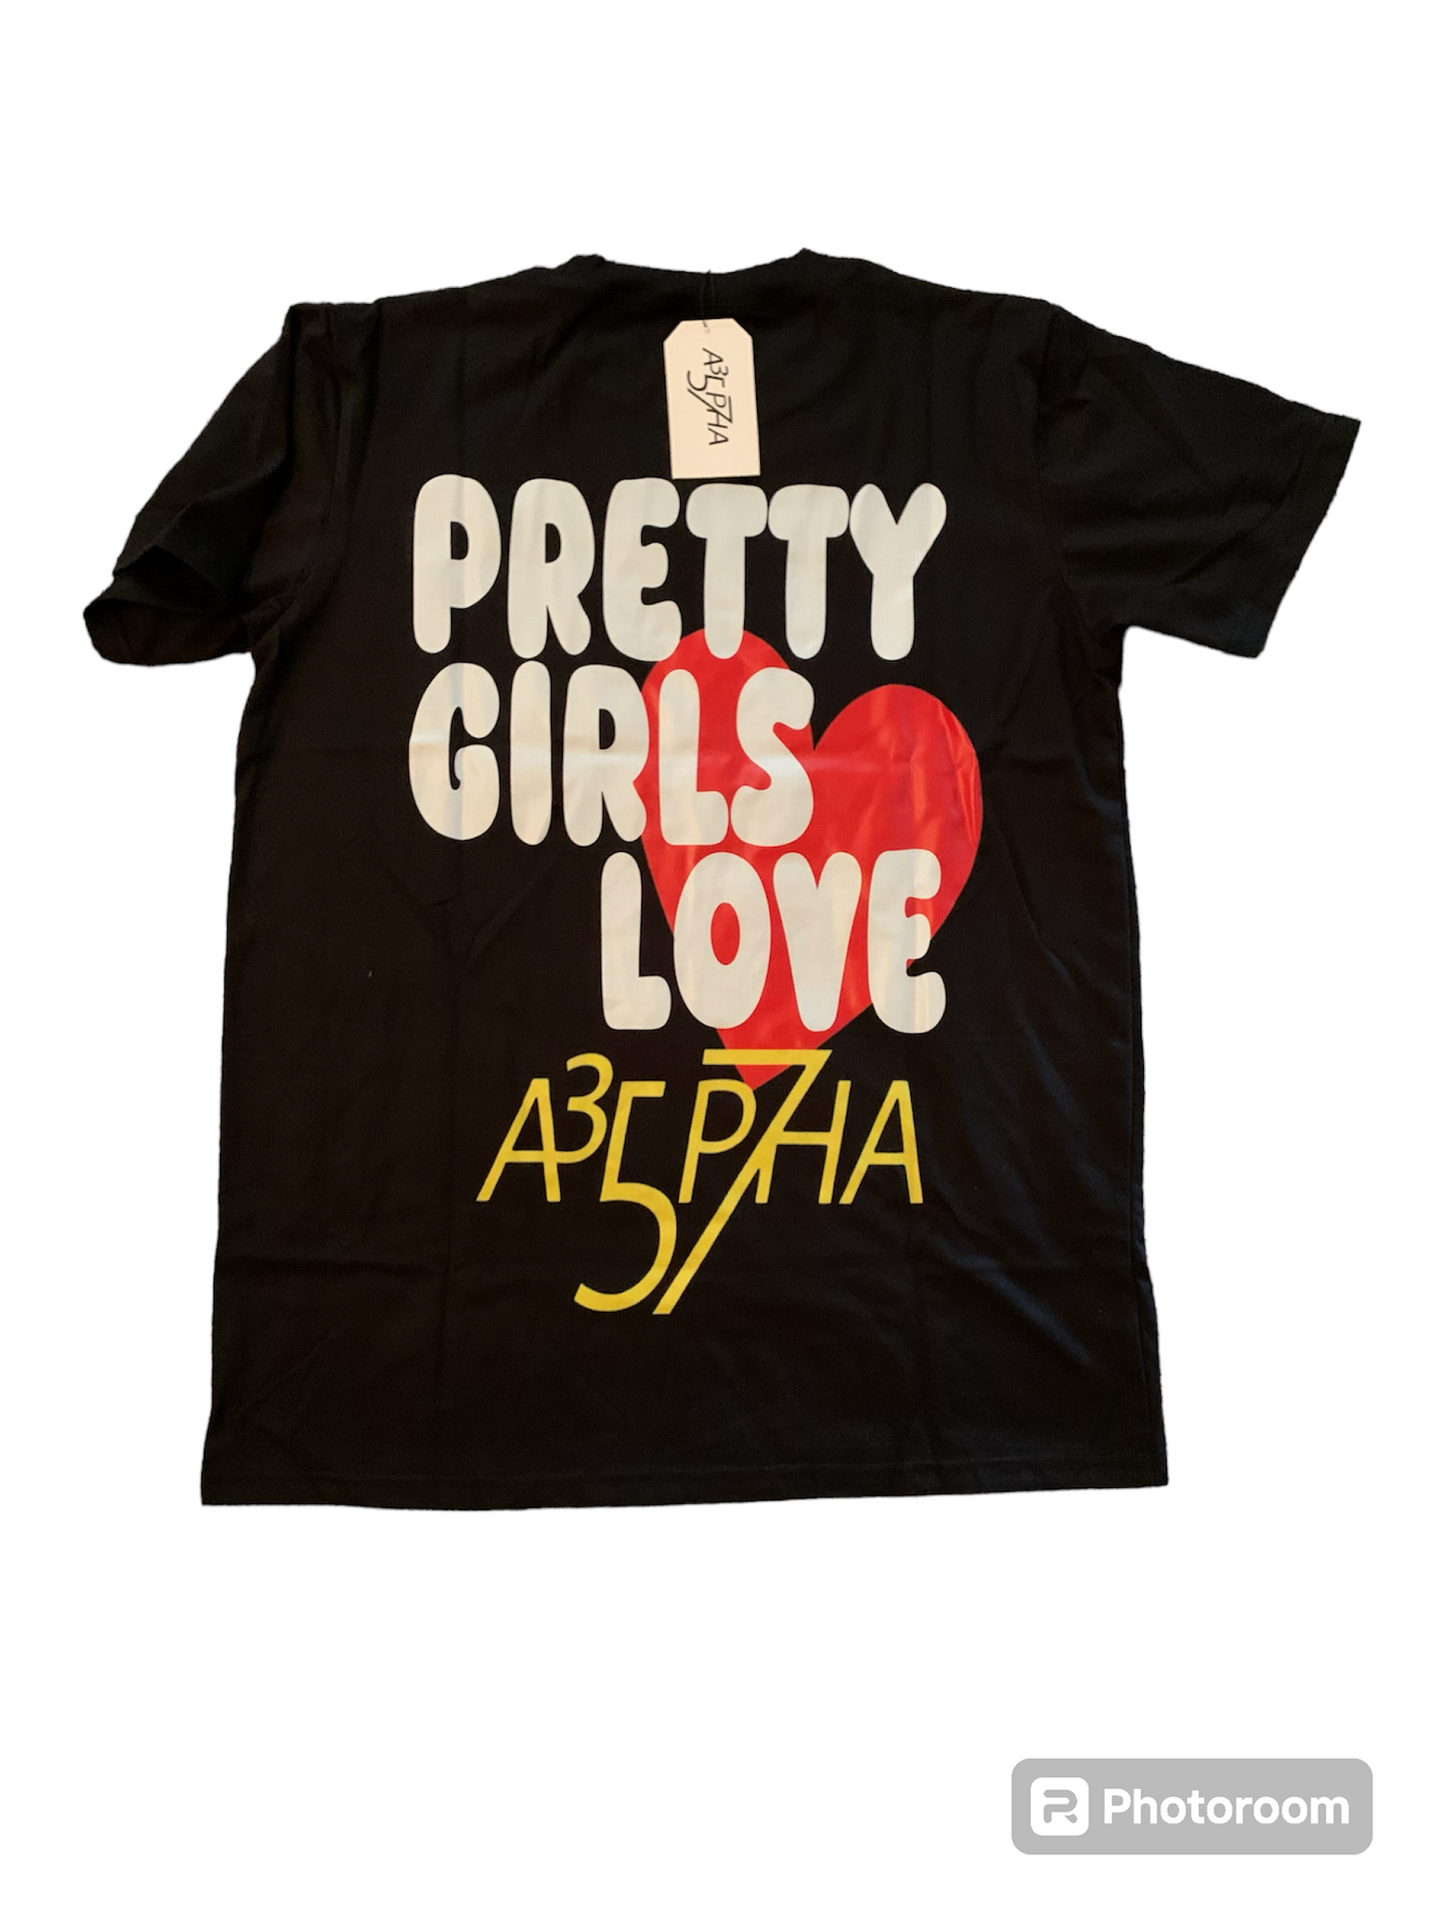 Pretty girls love Alpha shirt